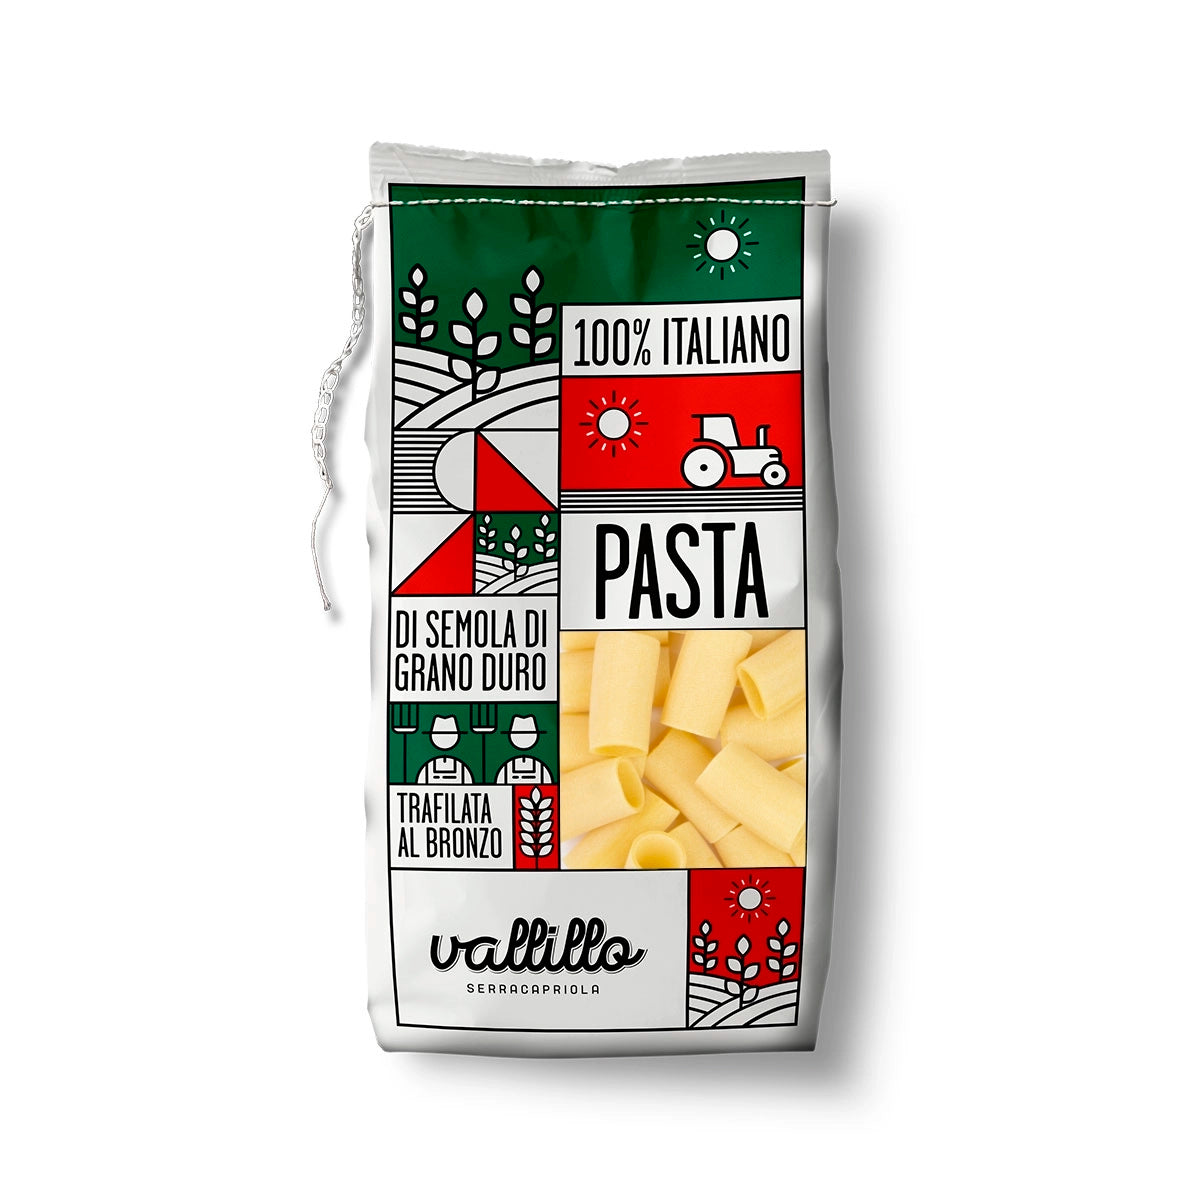 Paccheri - pasta artesanal 100% italiana